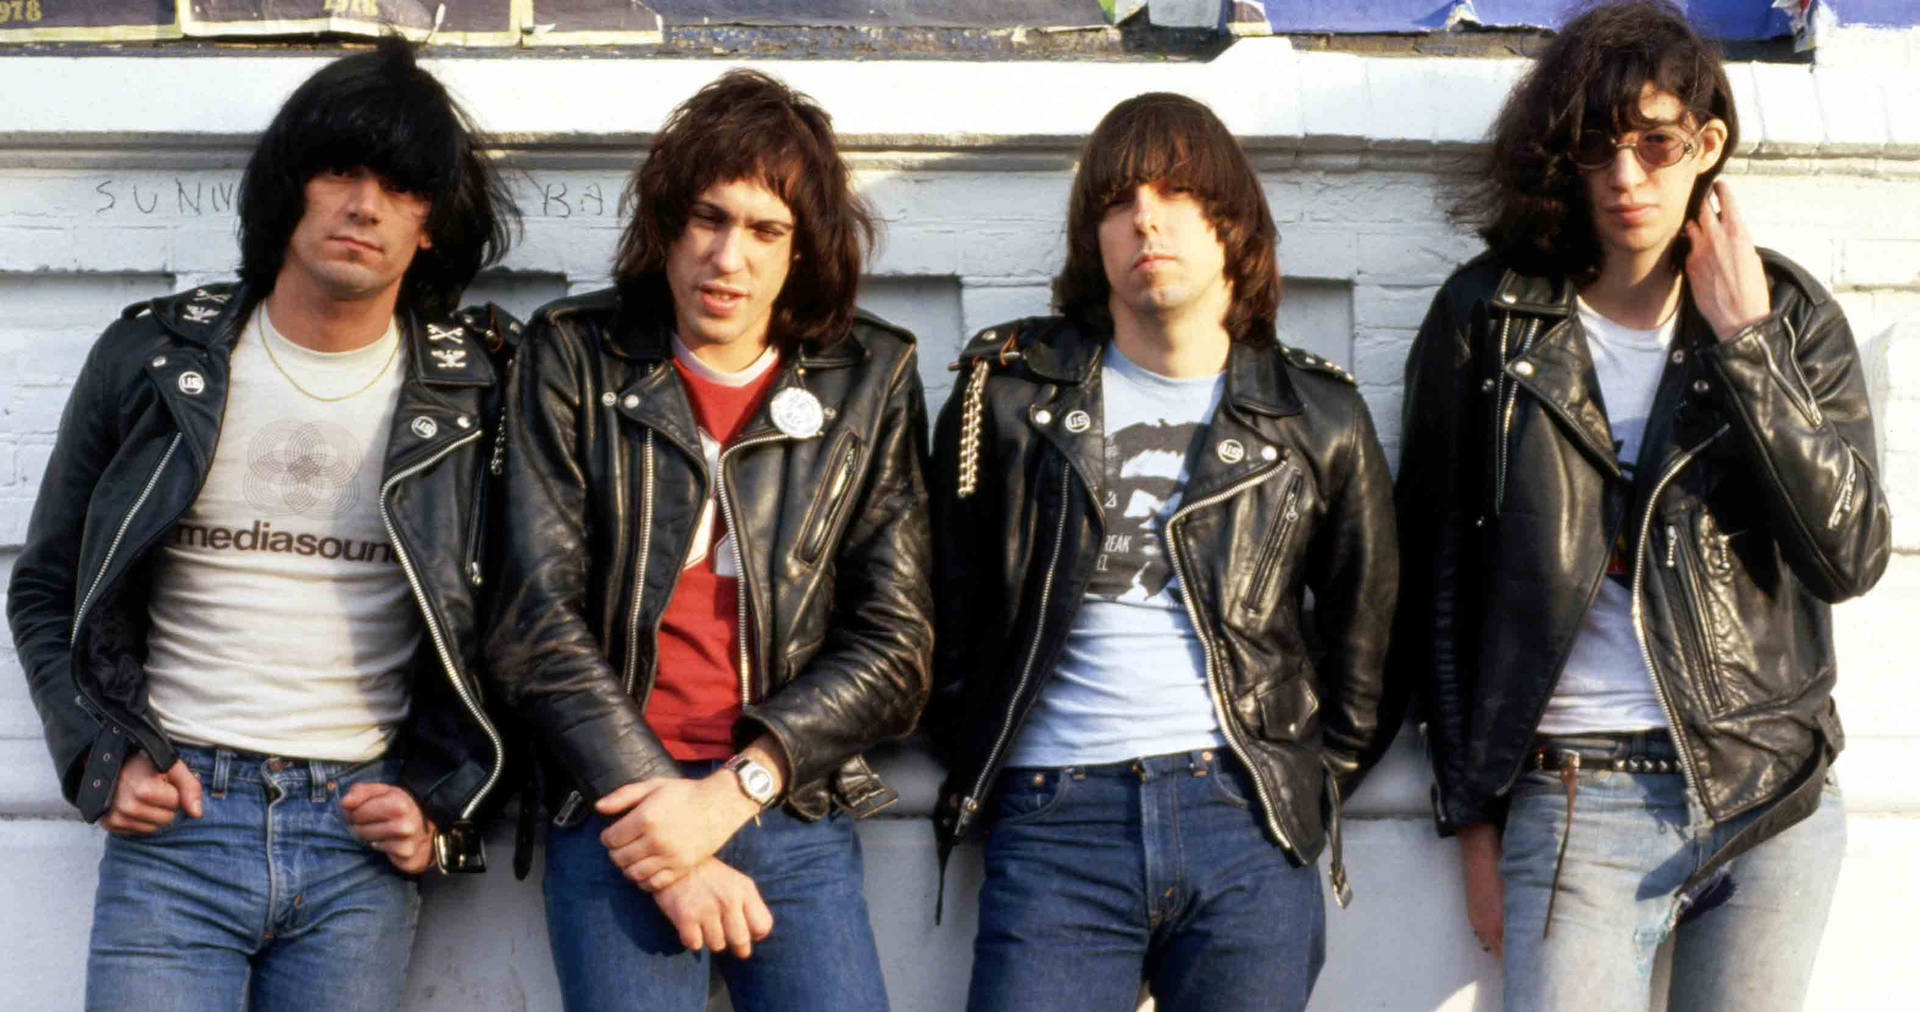 Iconic Ramones Band During A 1974 Photoshoot